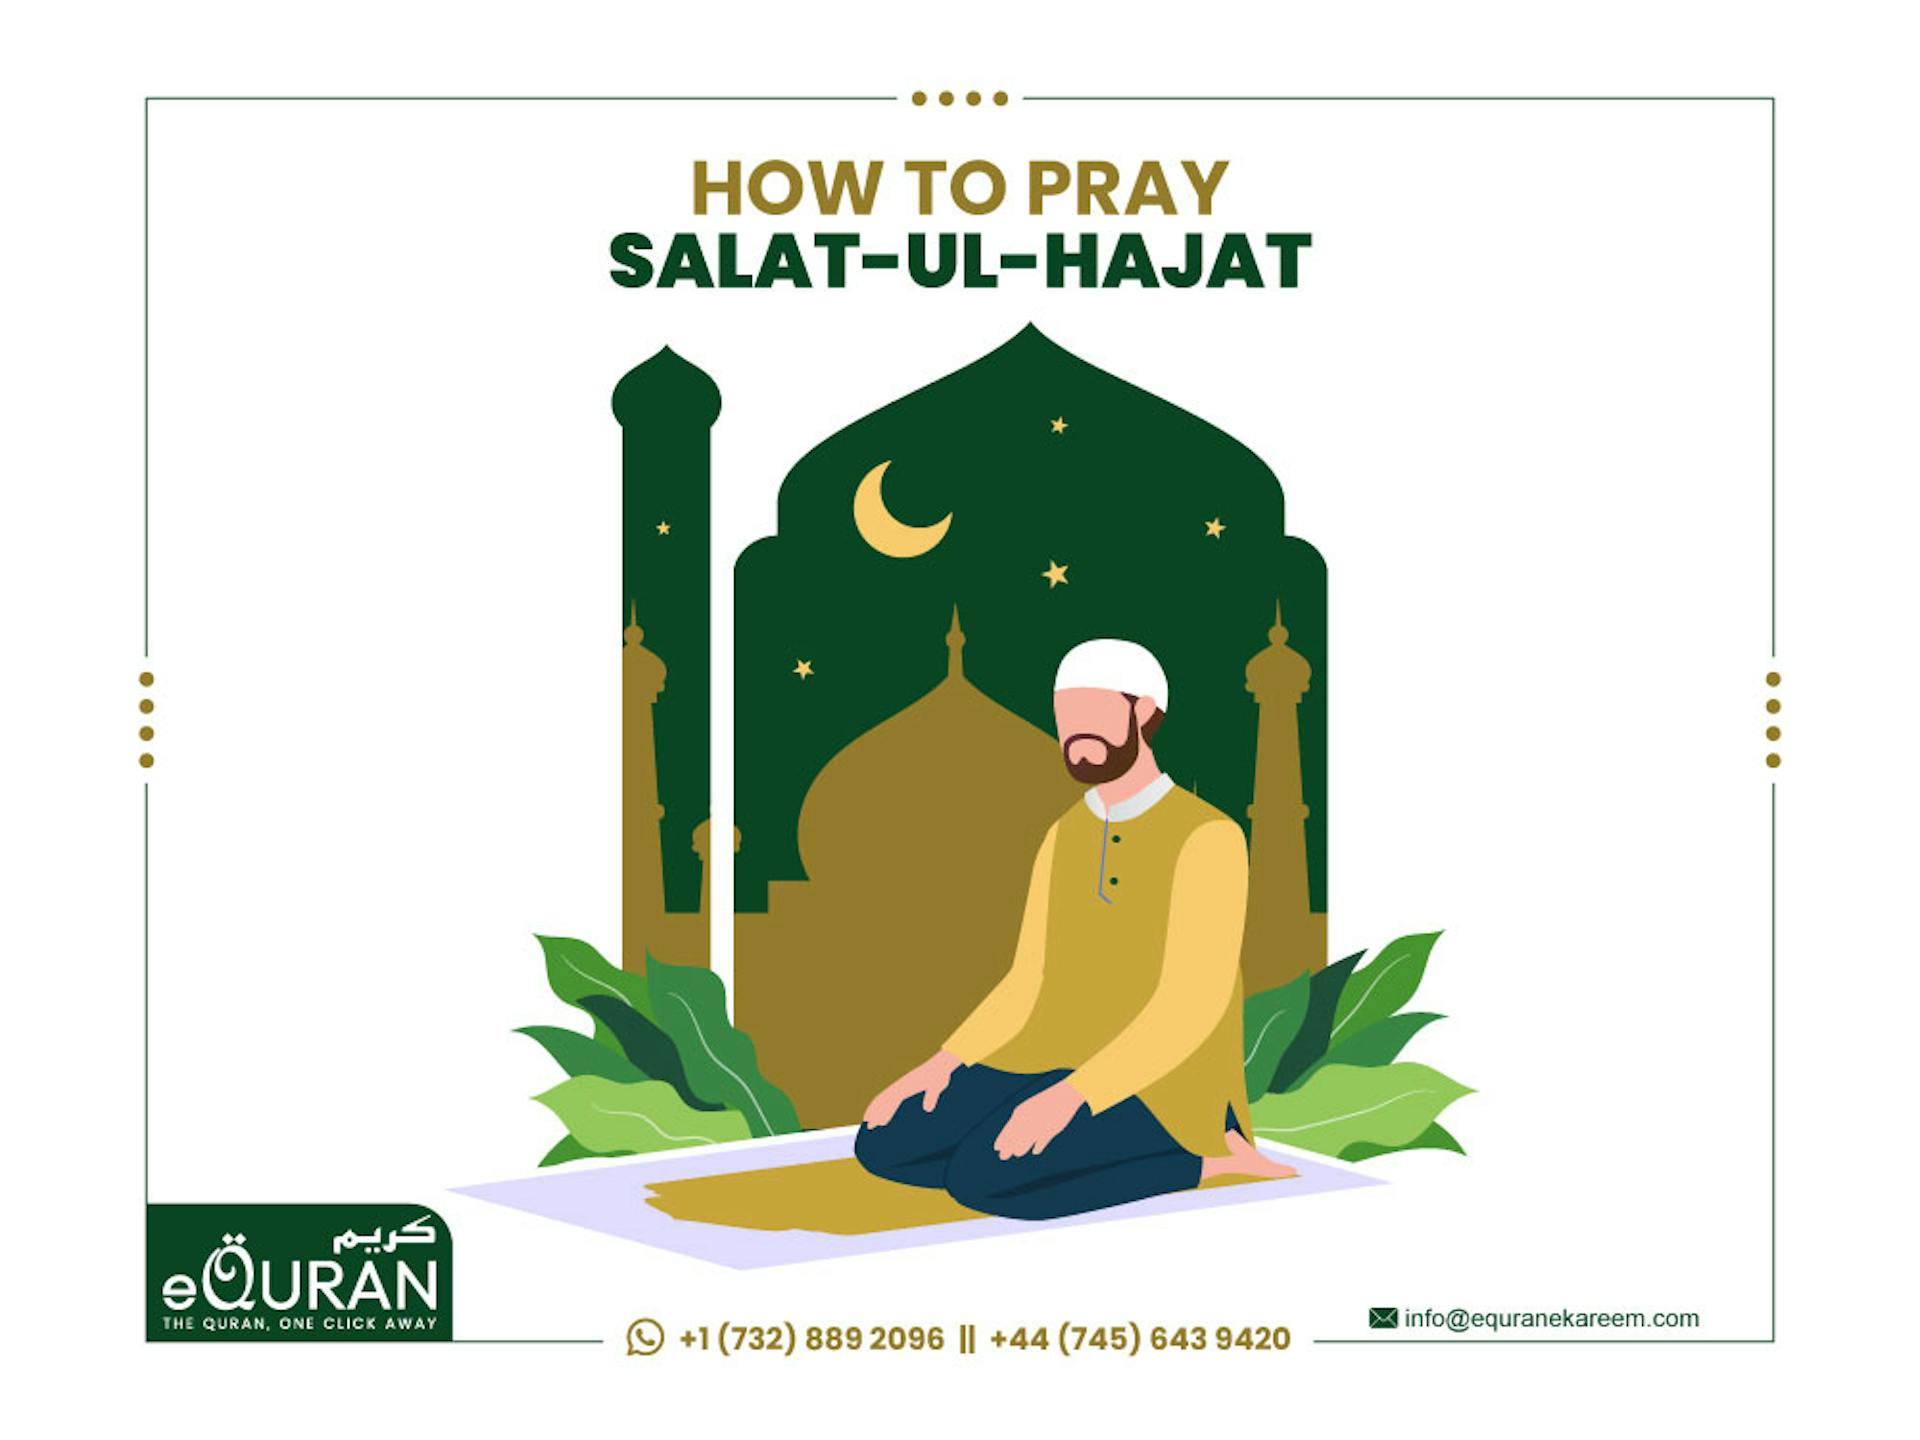 How to Pray salat ul hajat by equranekareem Online Quran Academy